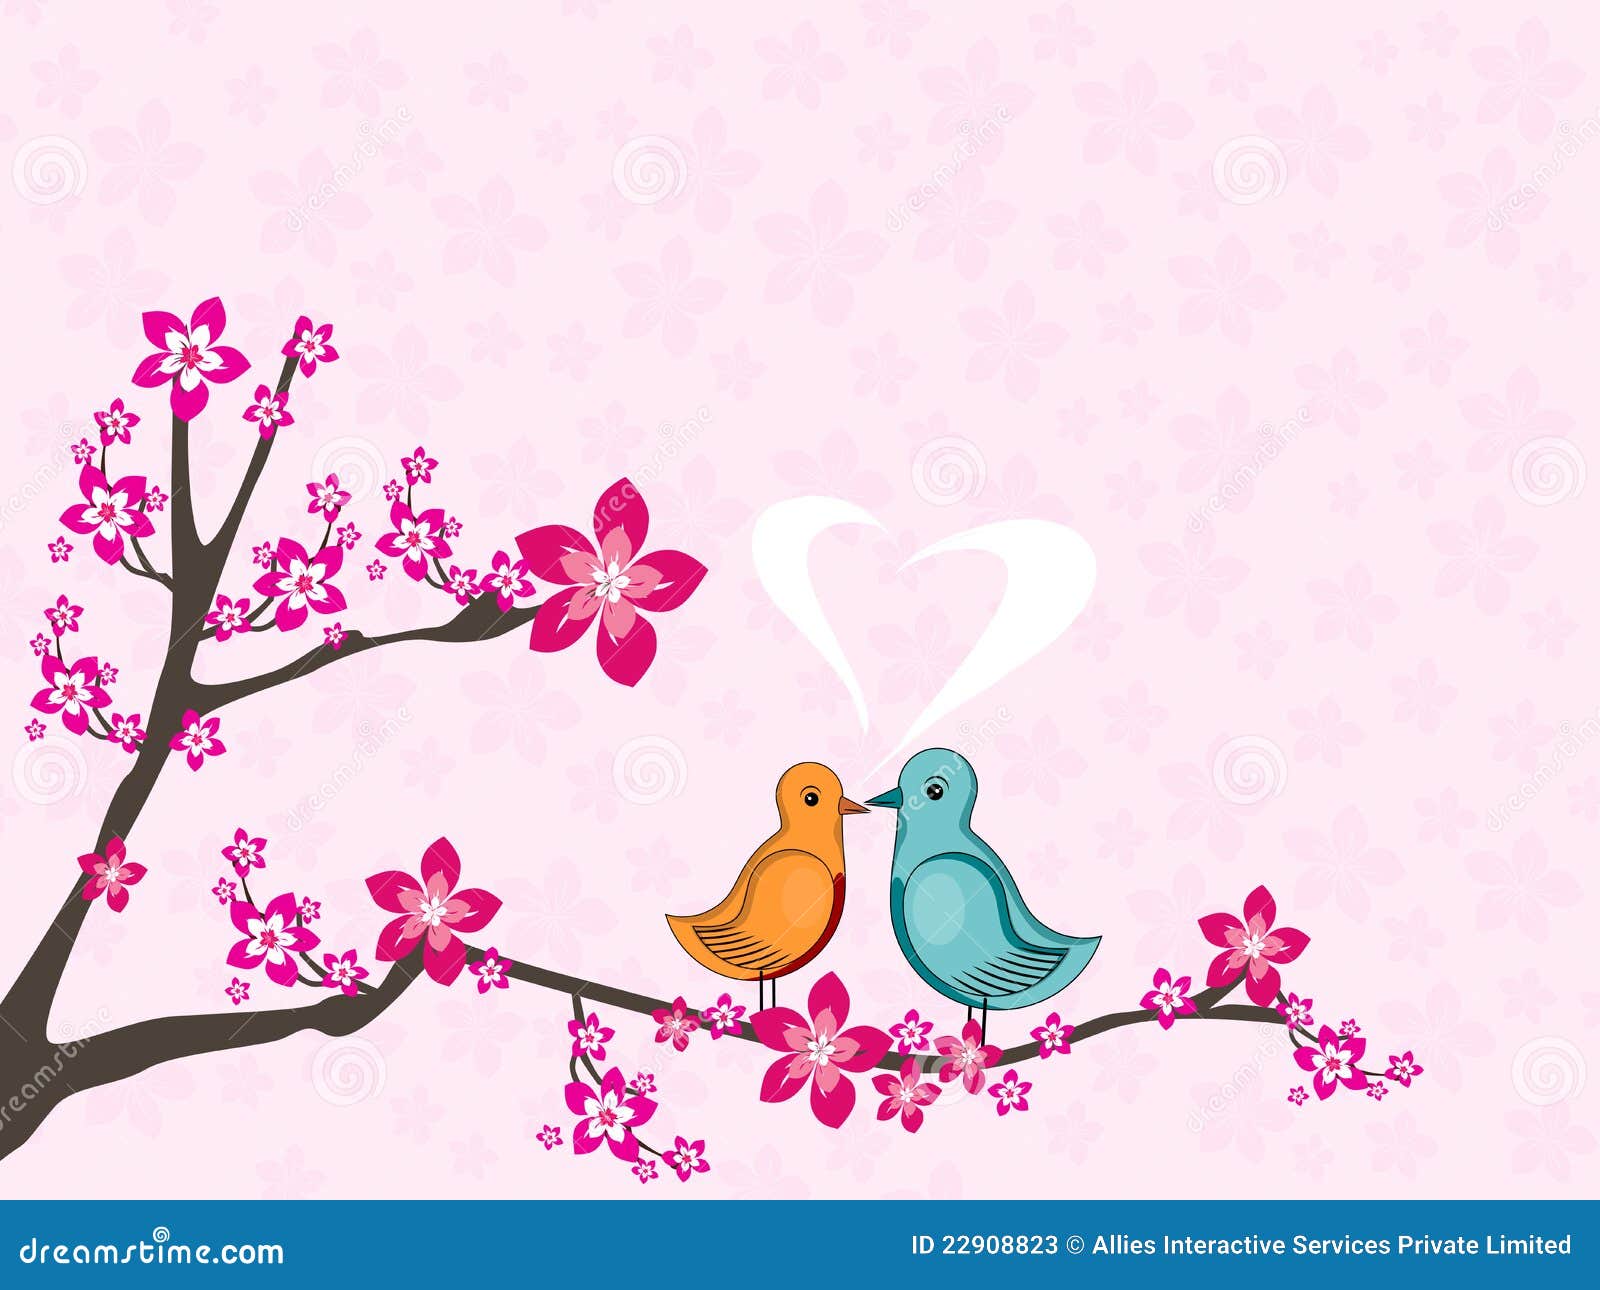 Love Birds Sitting On Tree Branch Stock Photos - Image: 22908823